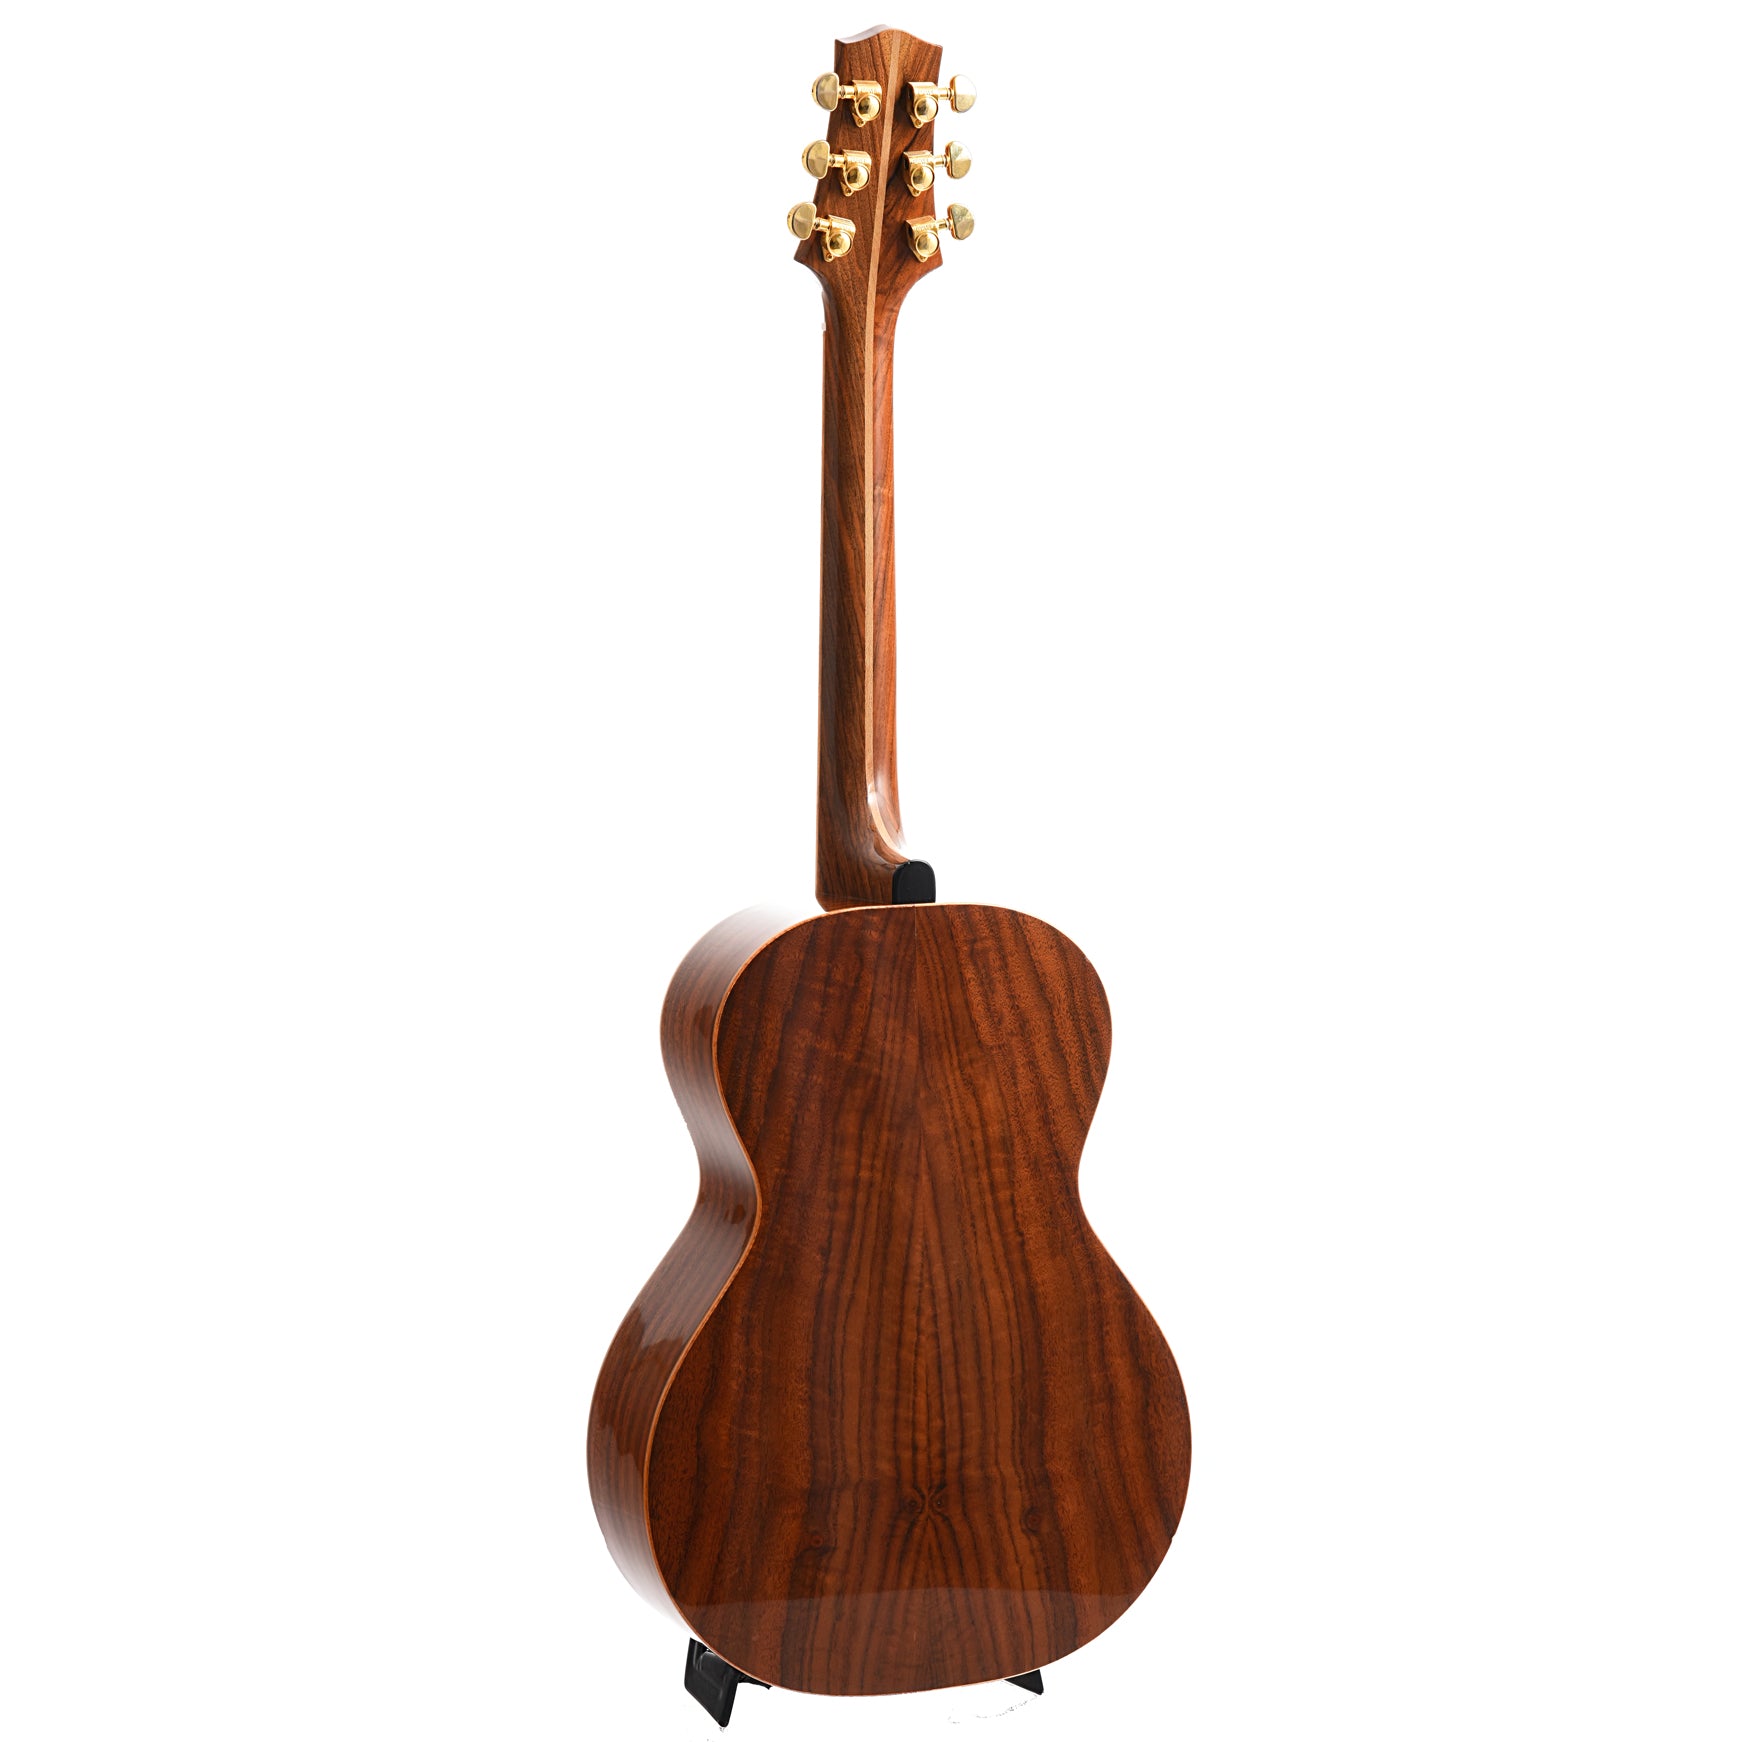 Image 13 of H.G. Leach "Kirby" Model (c.2002) - SKU# 20U-208177 : Product Type Flat-top Guitars : Elderly Instruments